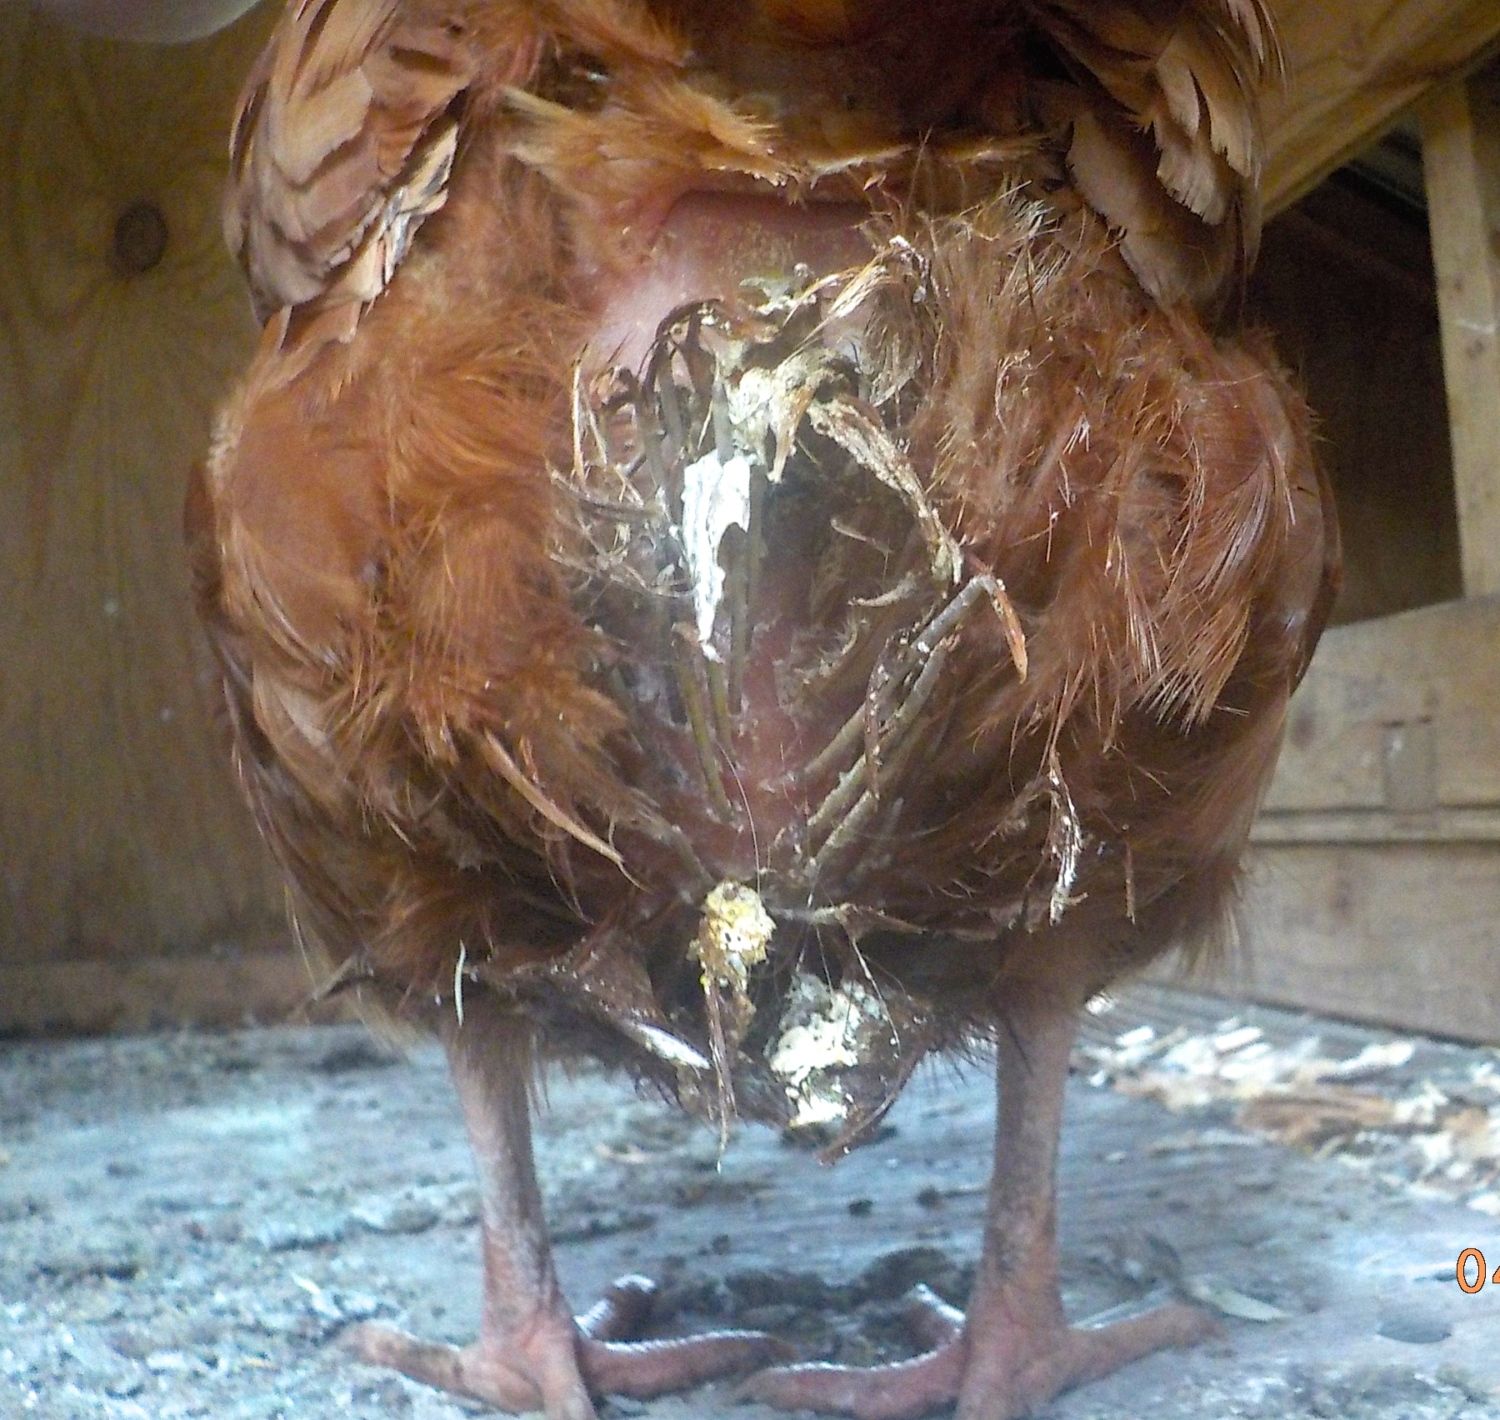 Emergency! Constipated/Eggbound Hen? Please Help! Pics!